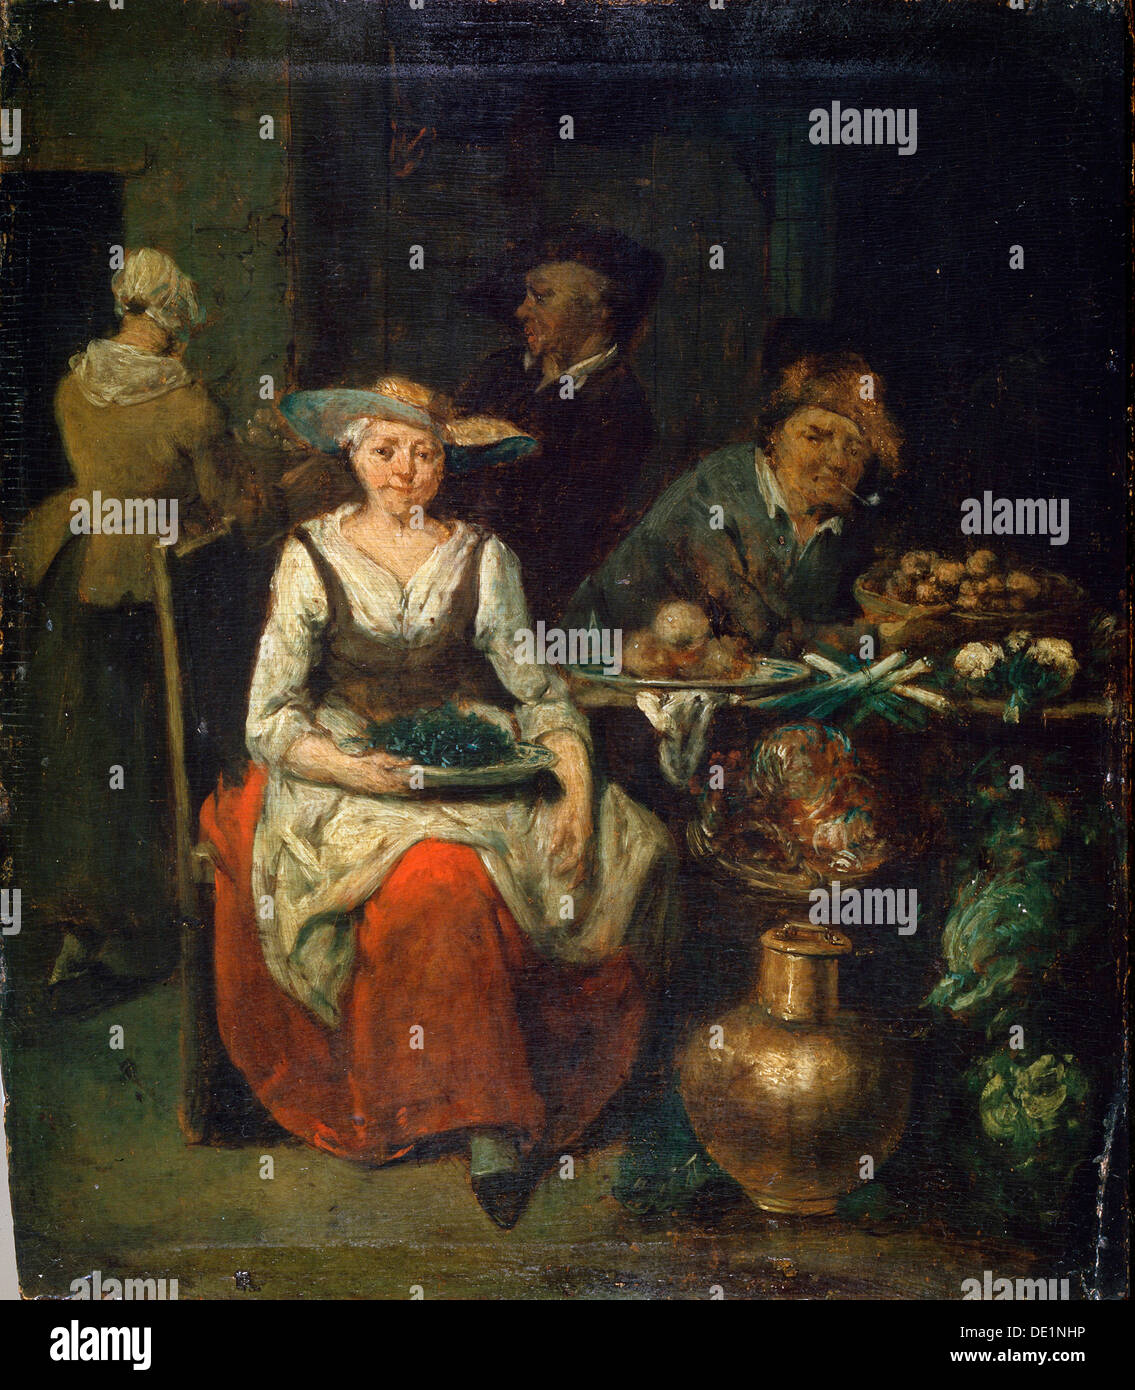 'At a Greengrocer', c1700-1730. Flemish painting Artist: Jan Baptist Lambrechts Stock Photo